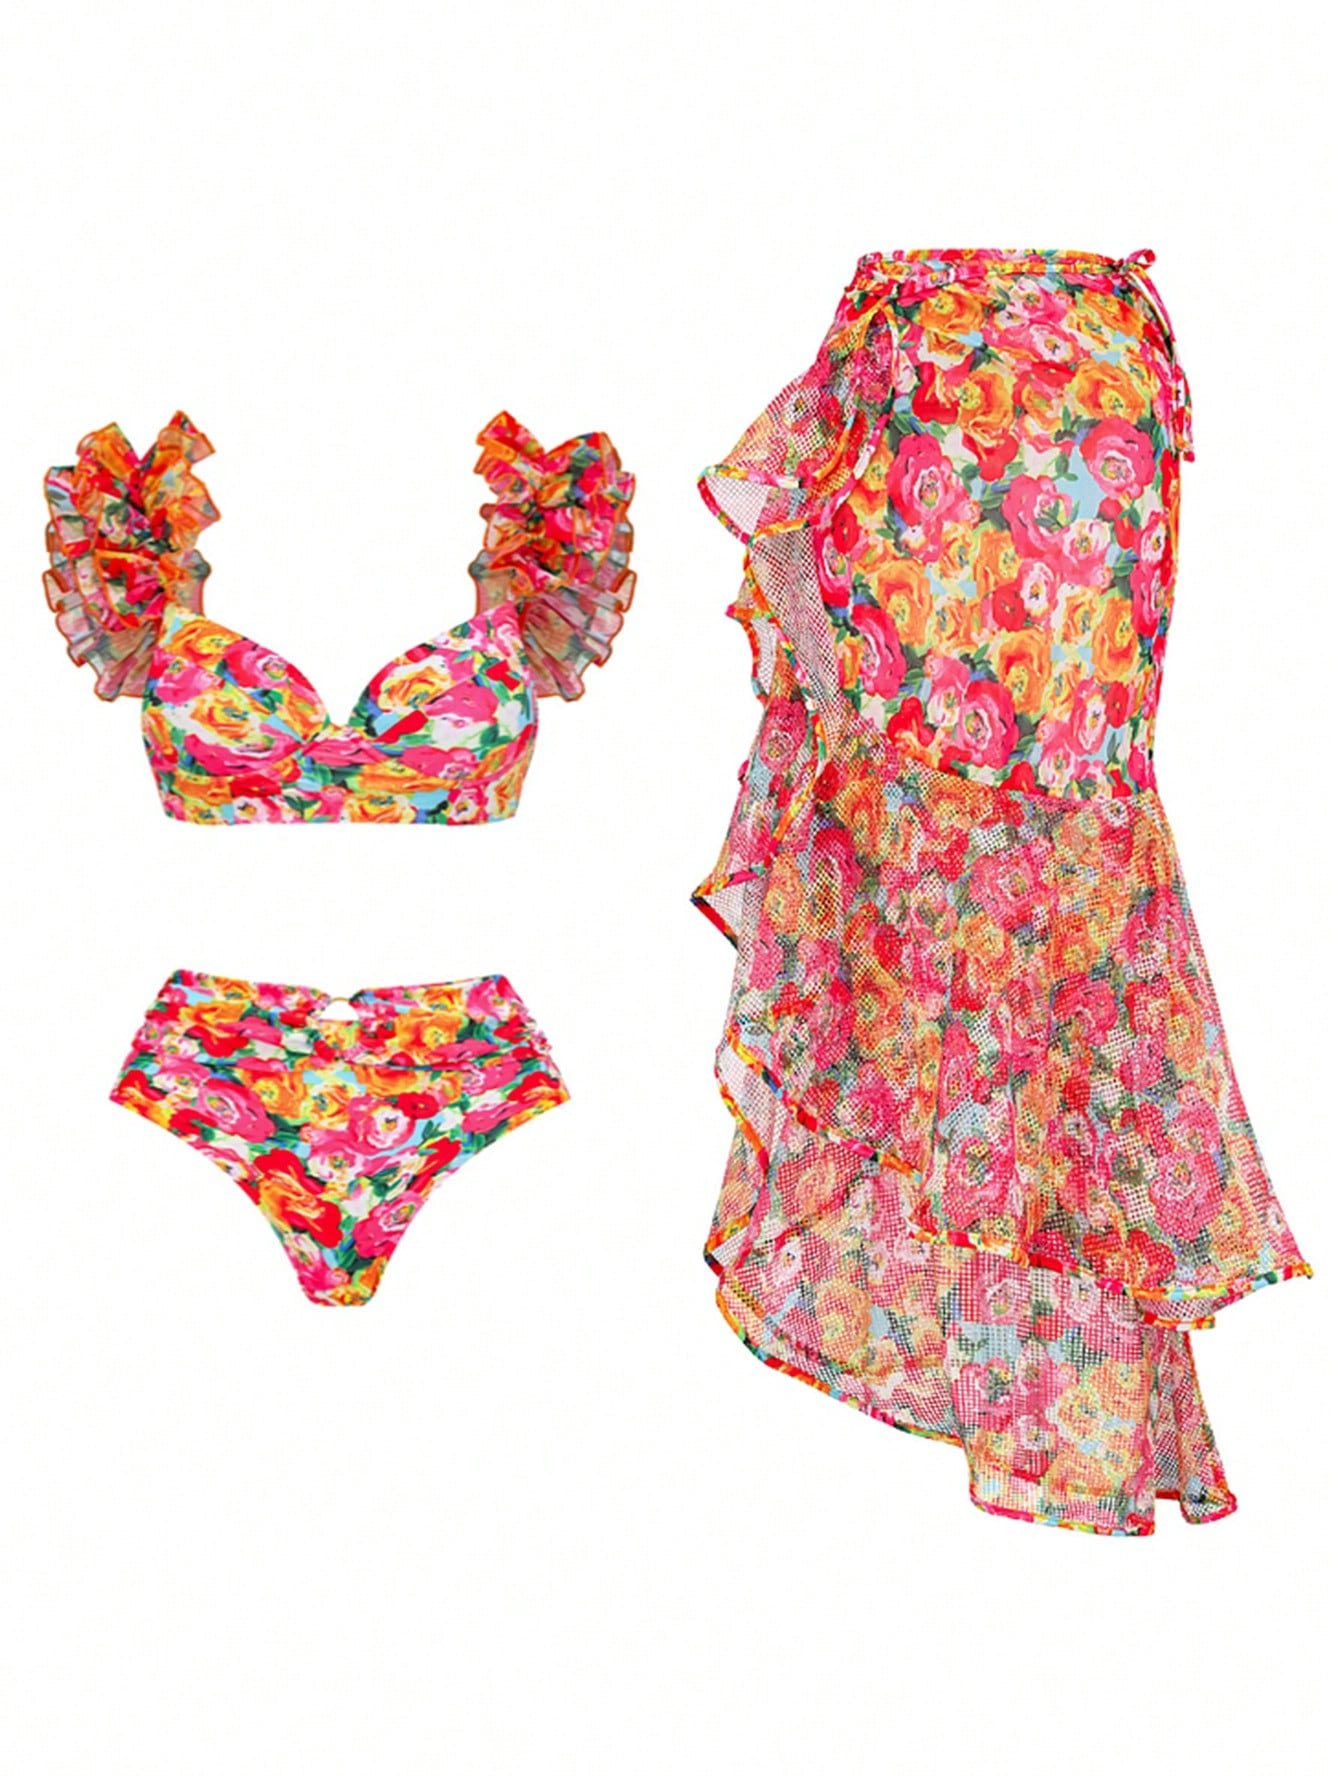 Bikinx Printed Splicing Swimsuit Set With Ruffle Hem And Underwire Bra Cups Including Mermaid Tail Skirt